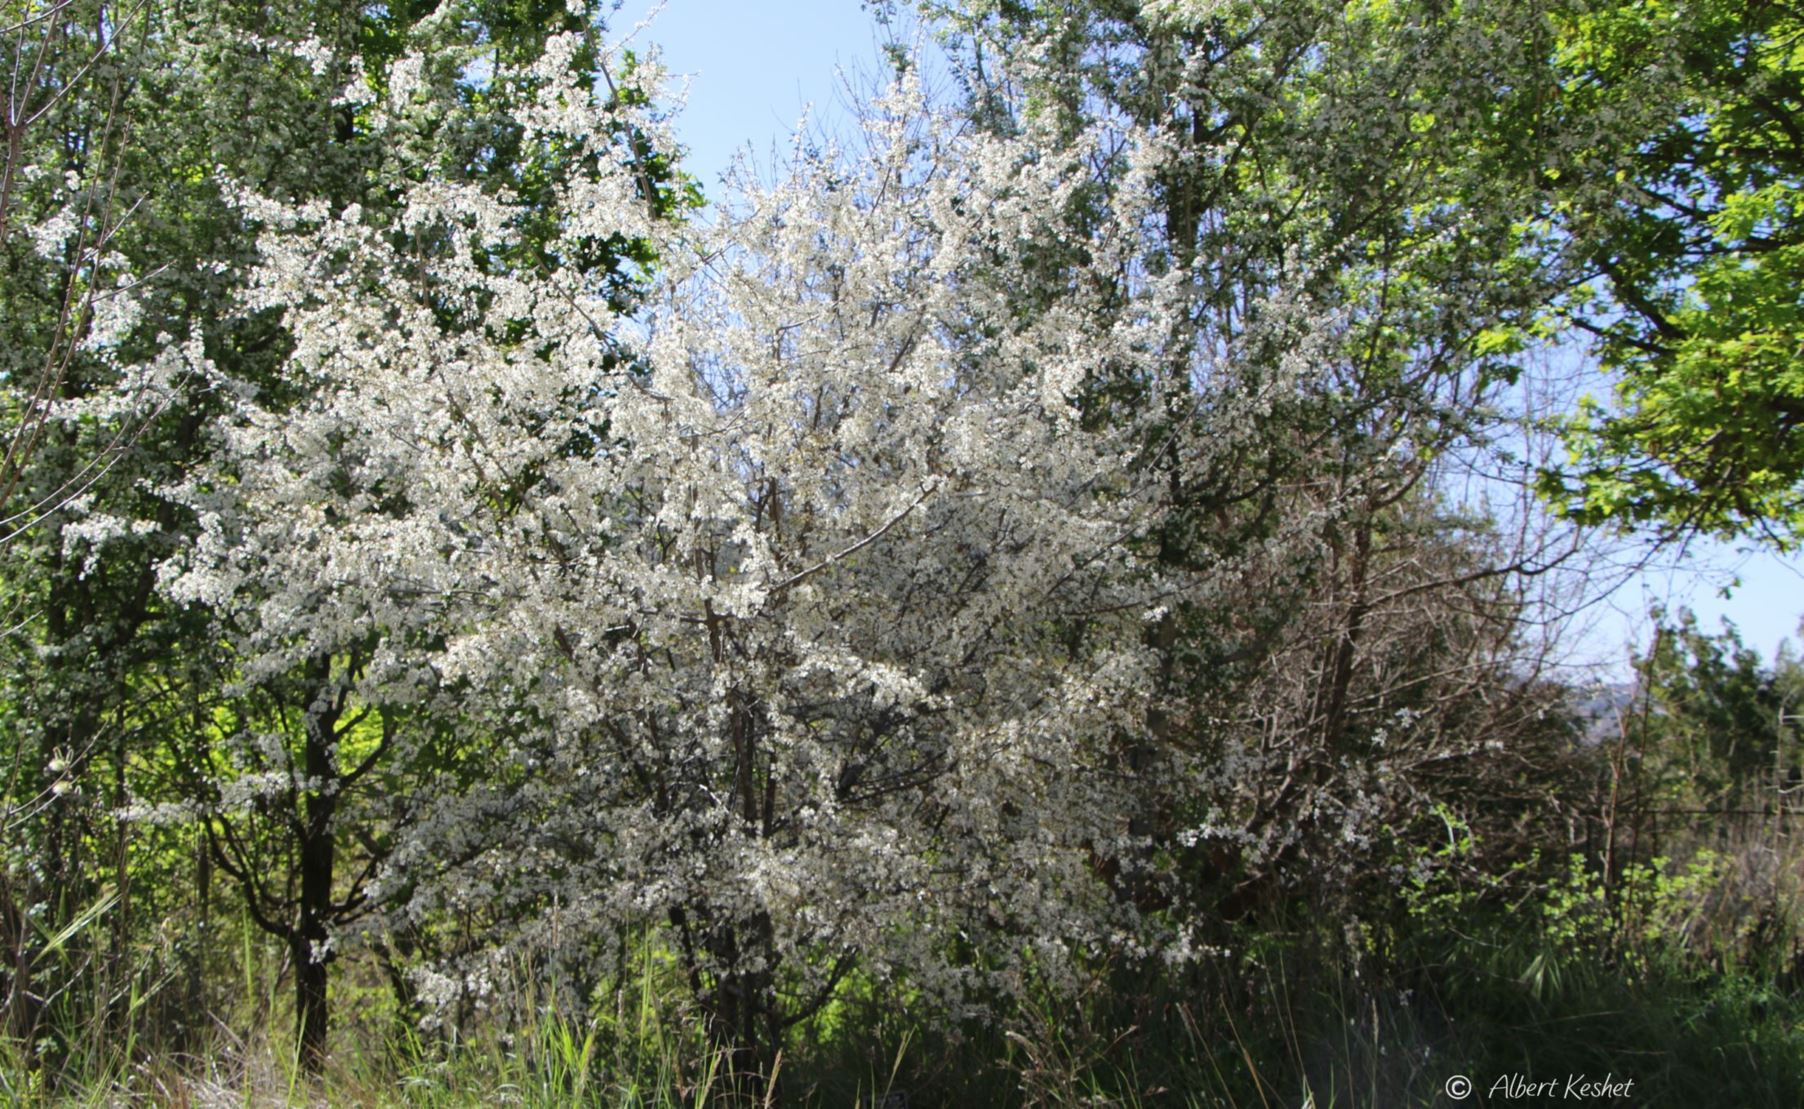 Prunus spinosa - Sloe, Blackthorn, שזיף קוצני, שזיף קוצני